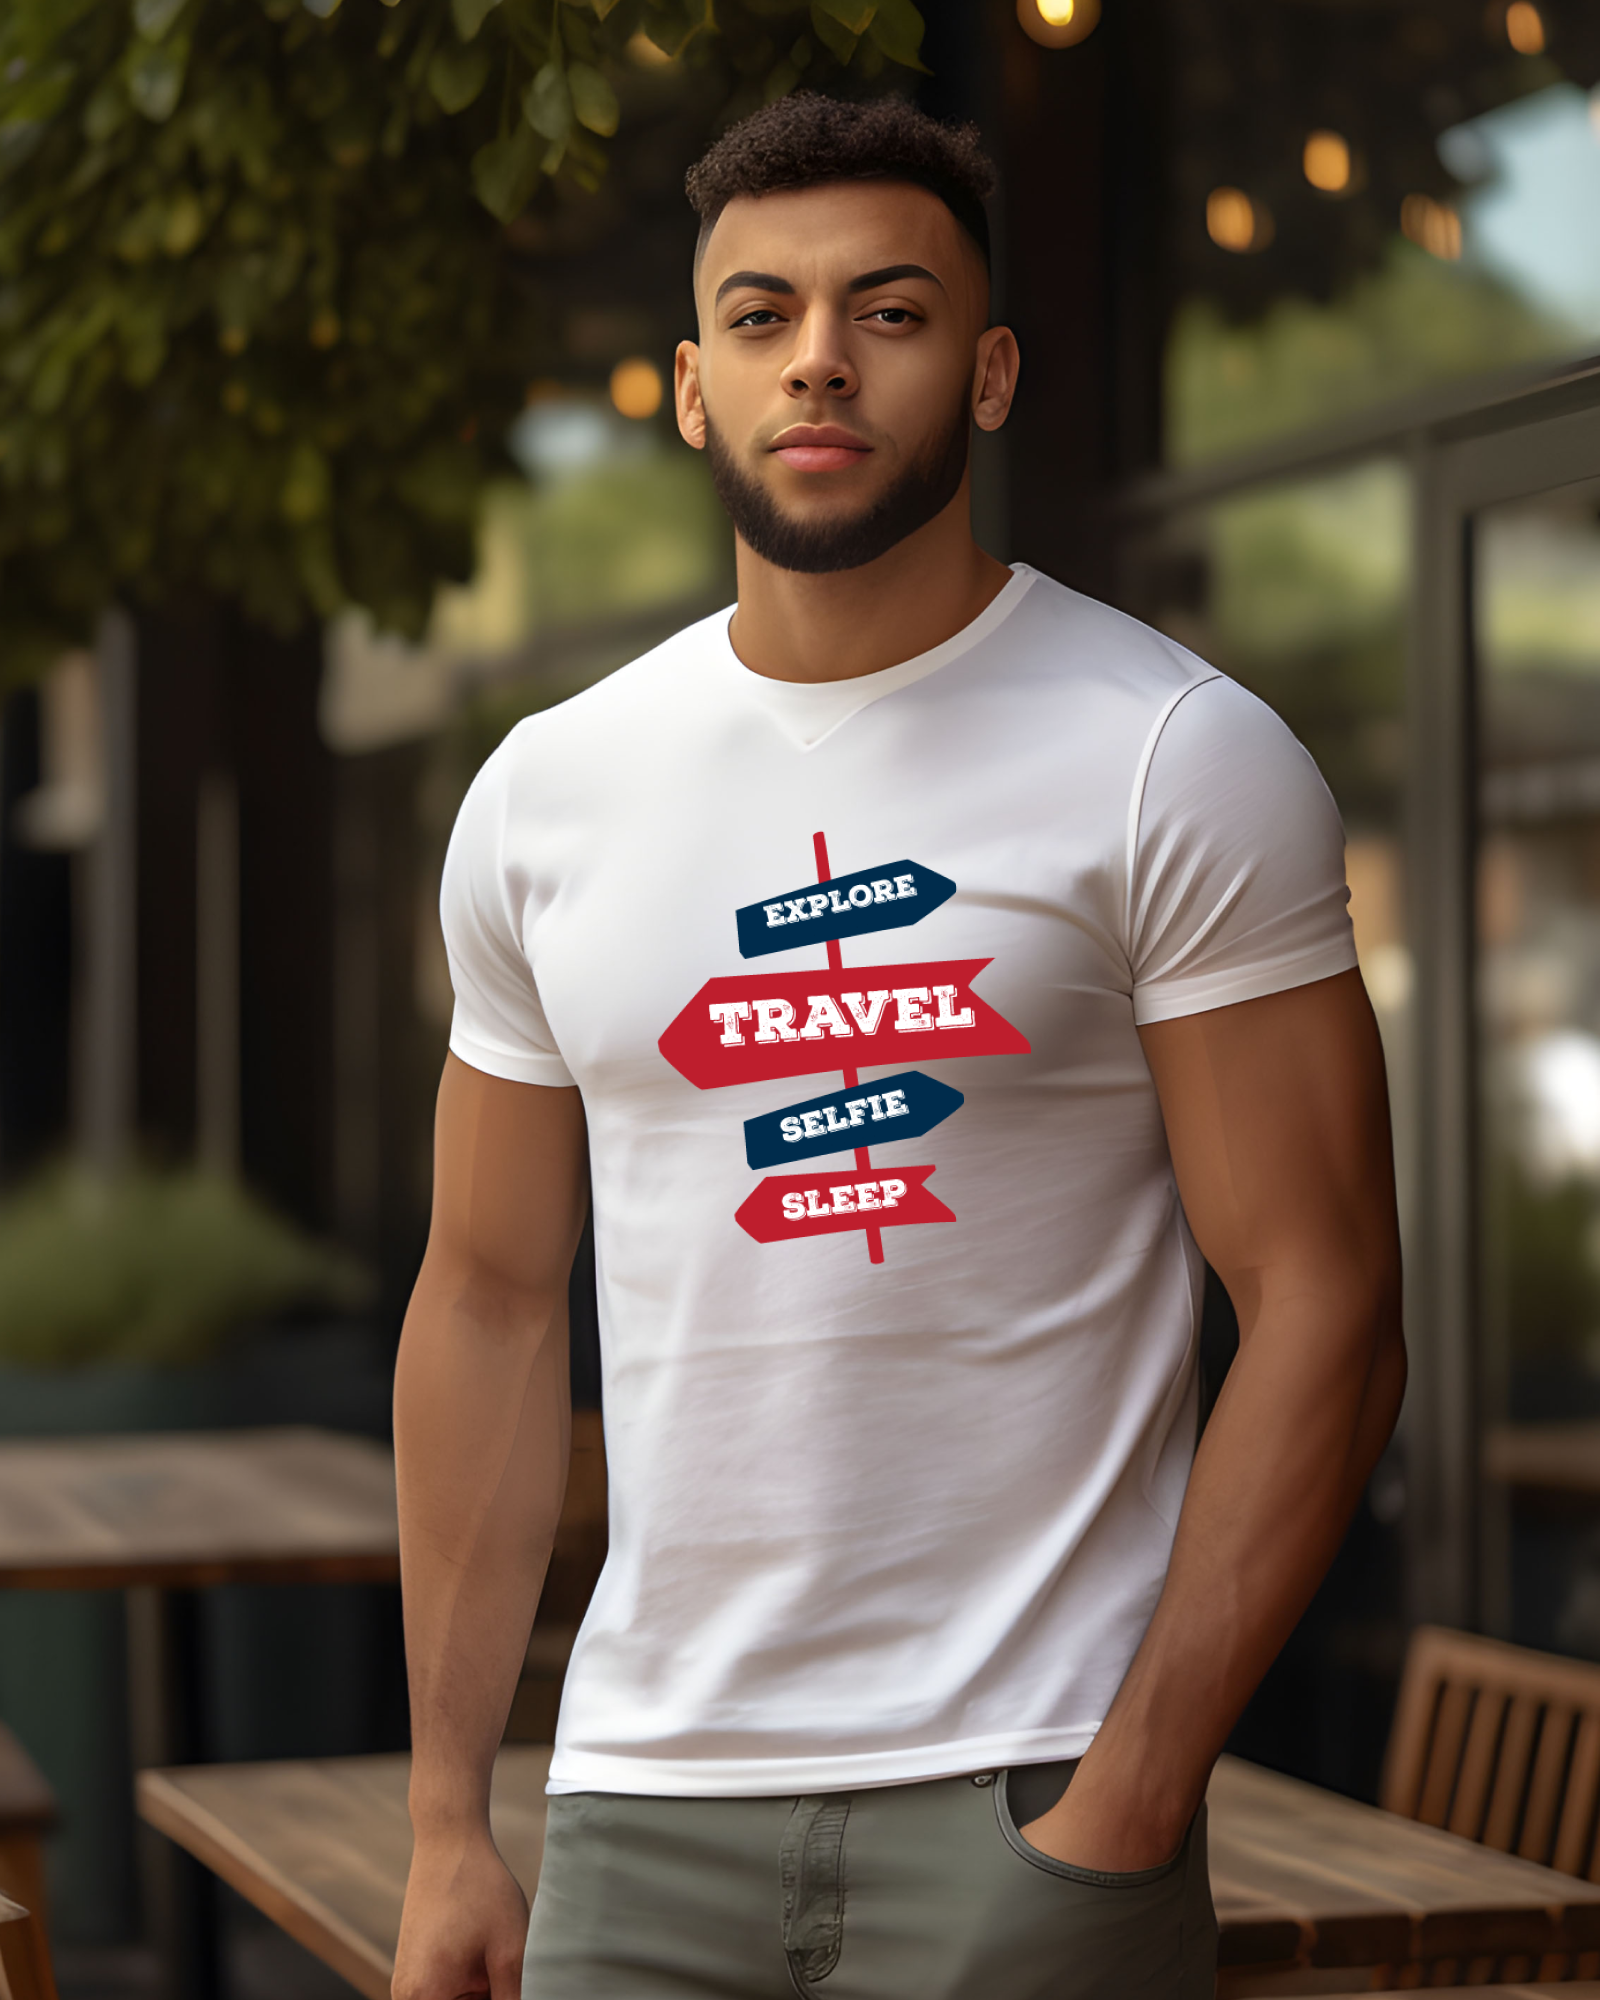 Explore Travel Selfie Sleep T-Shirt